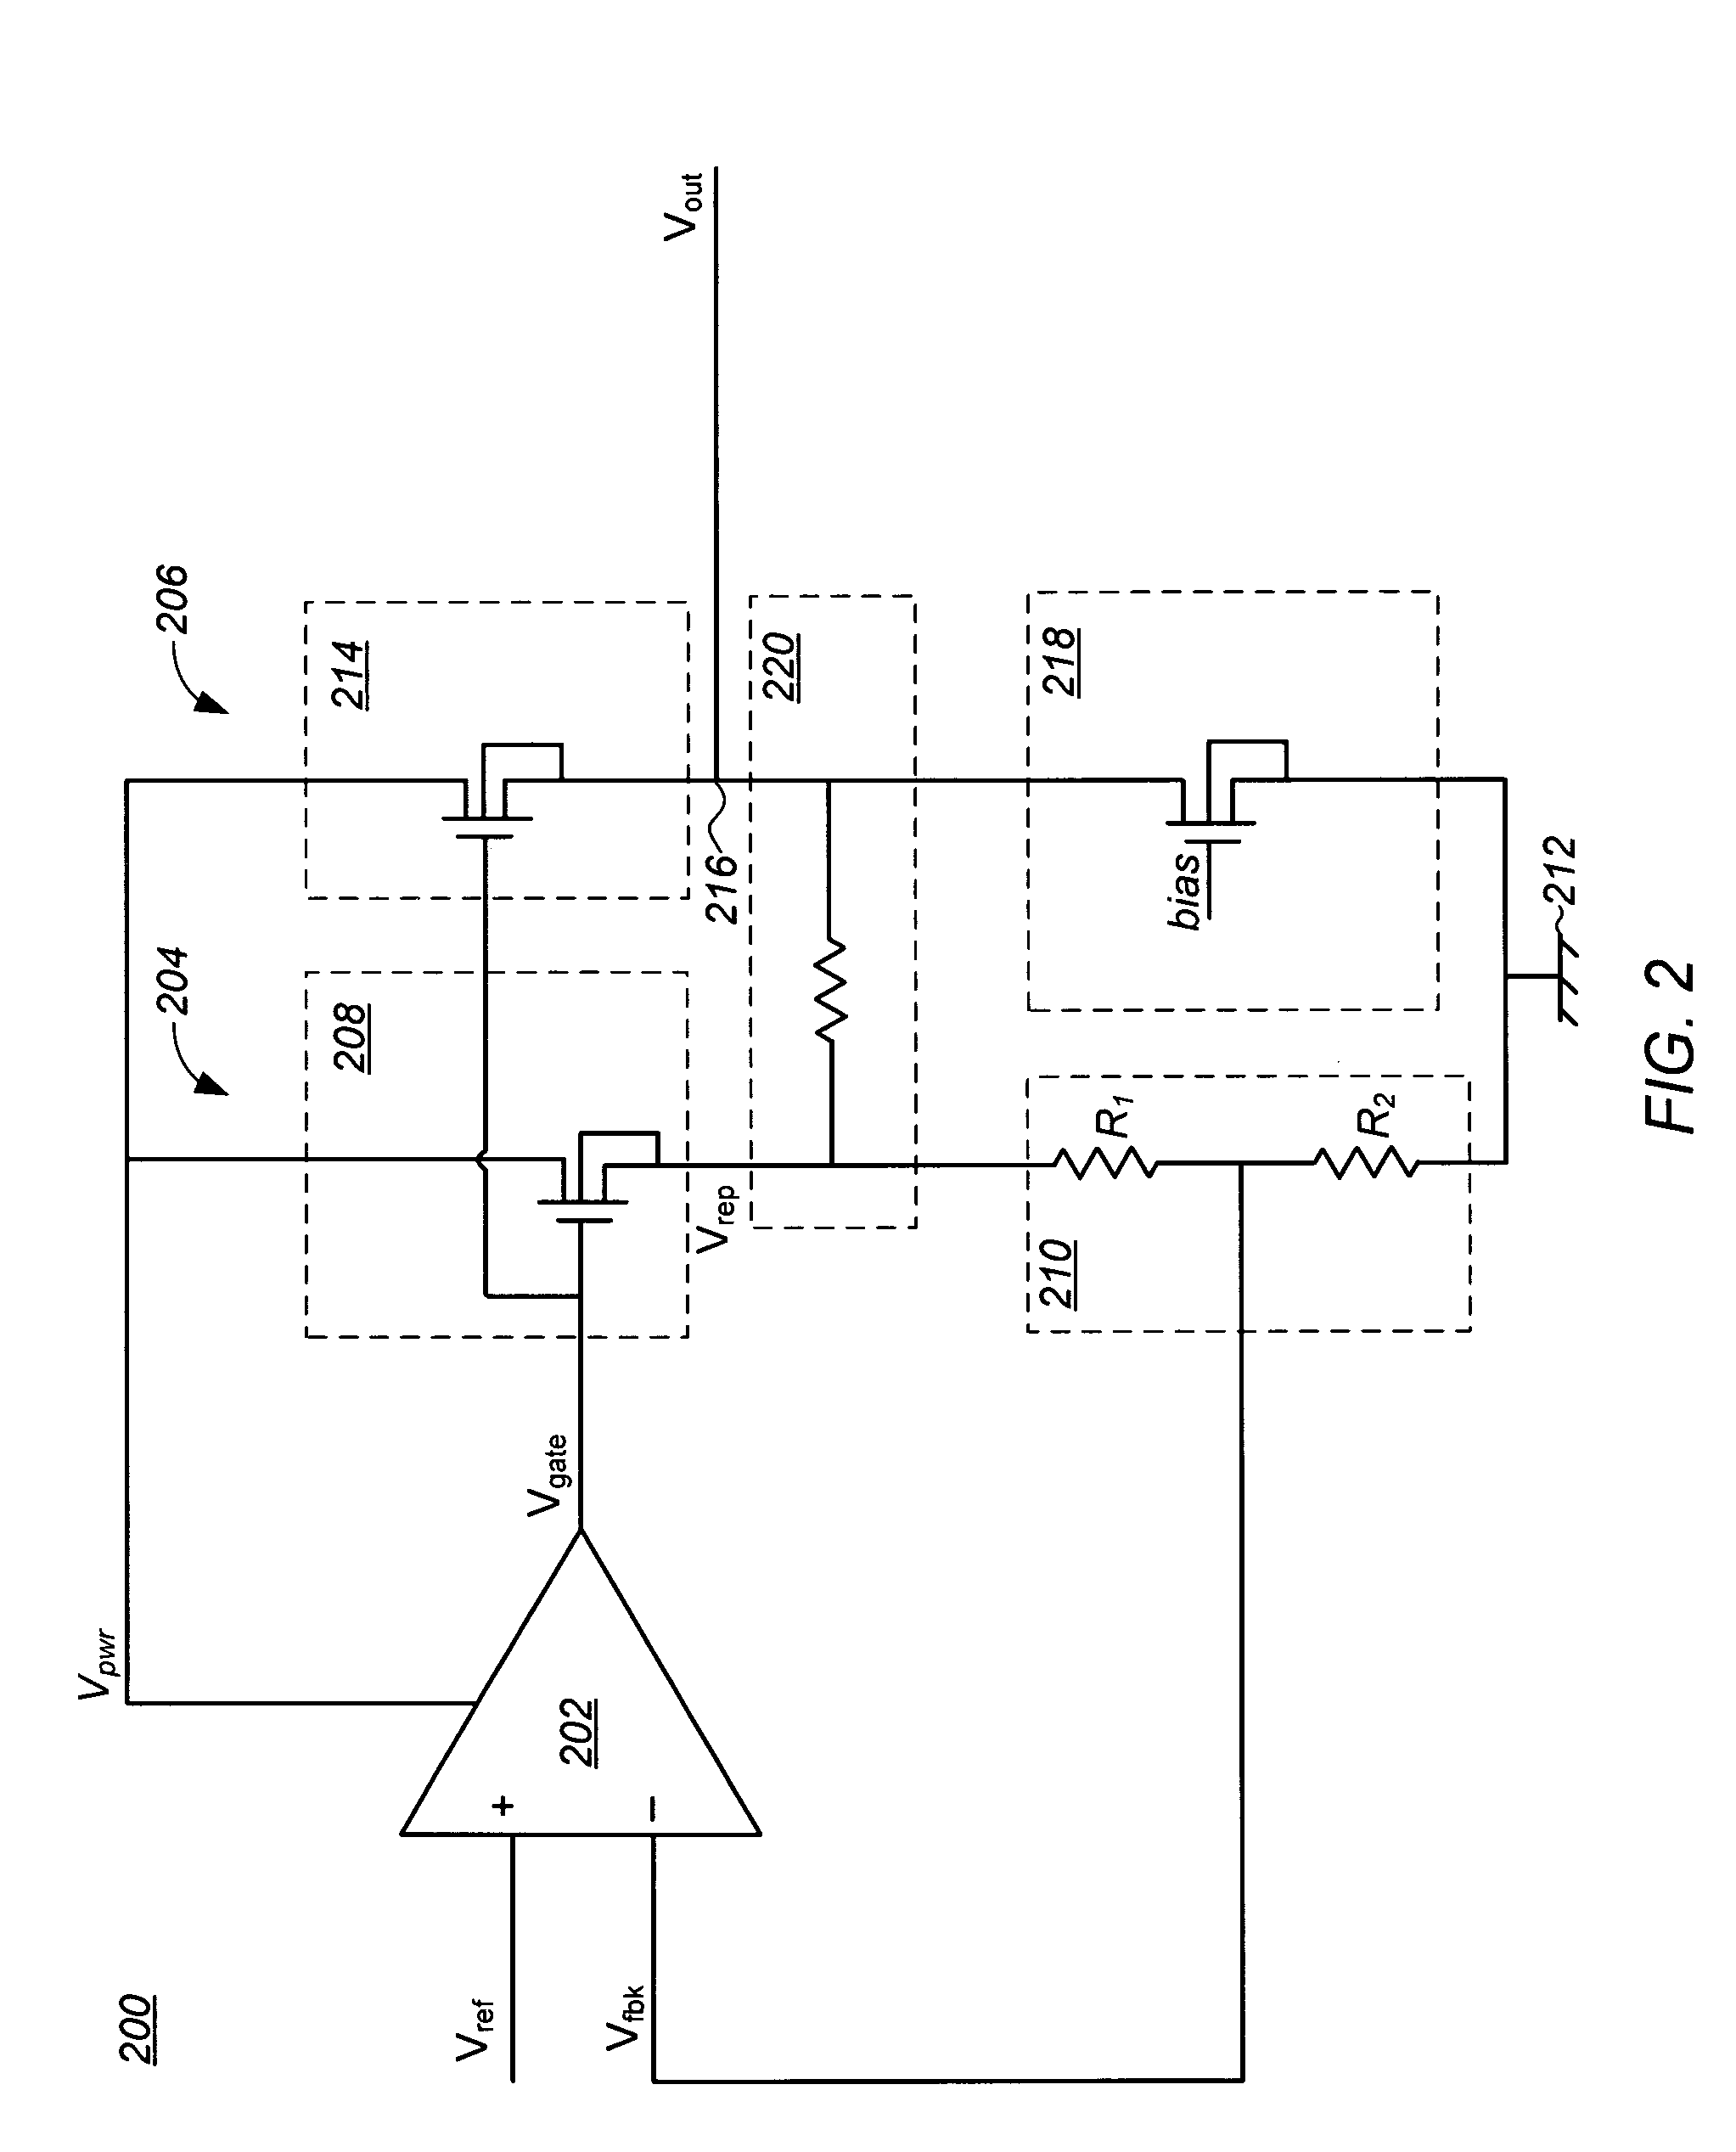 Replica transistor voltage regulator